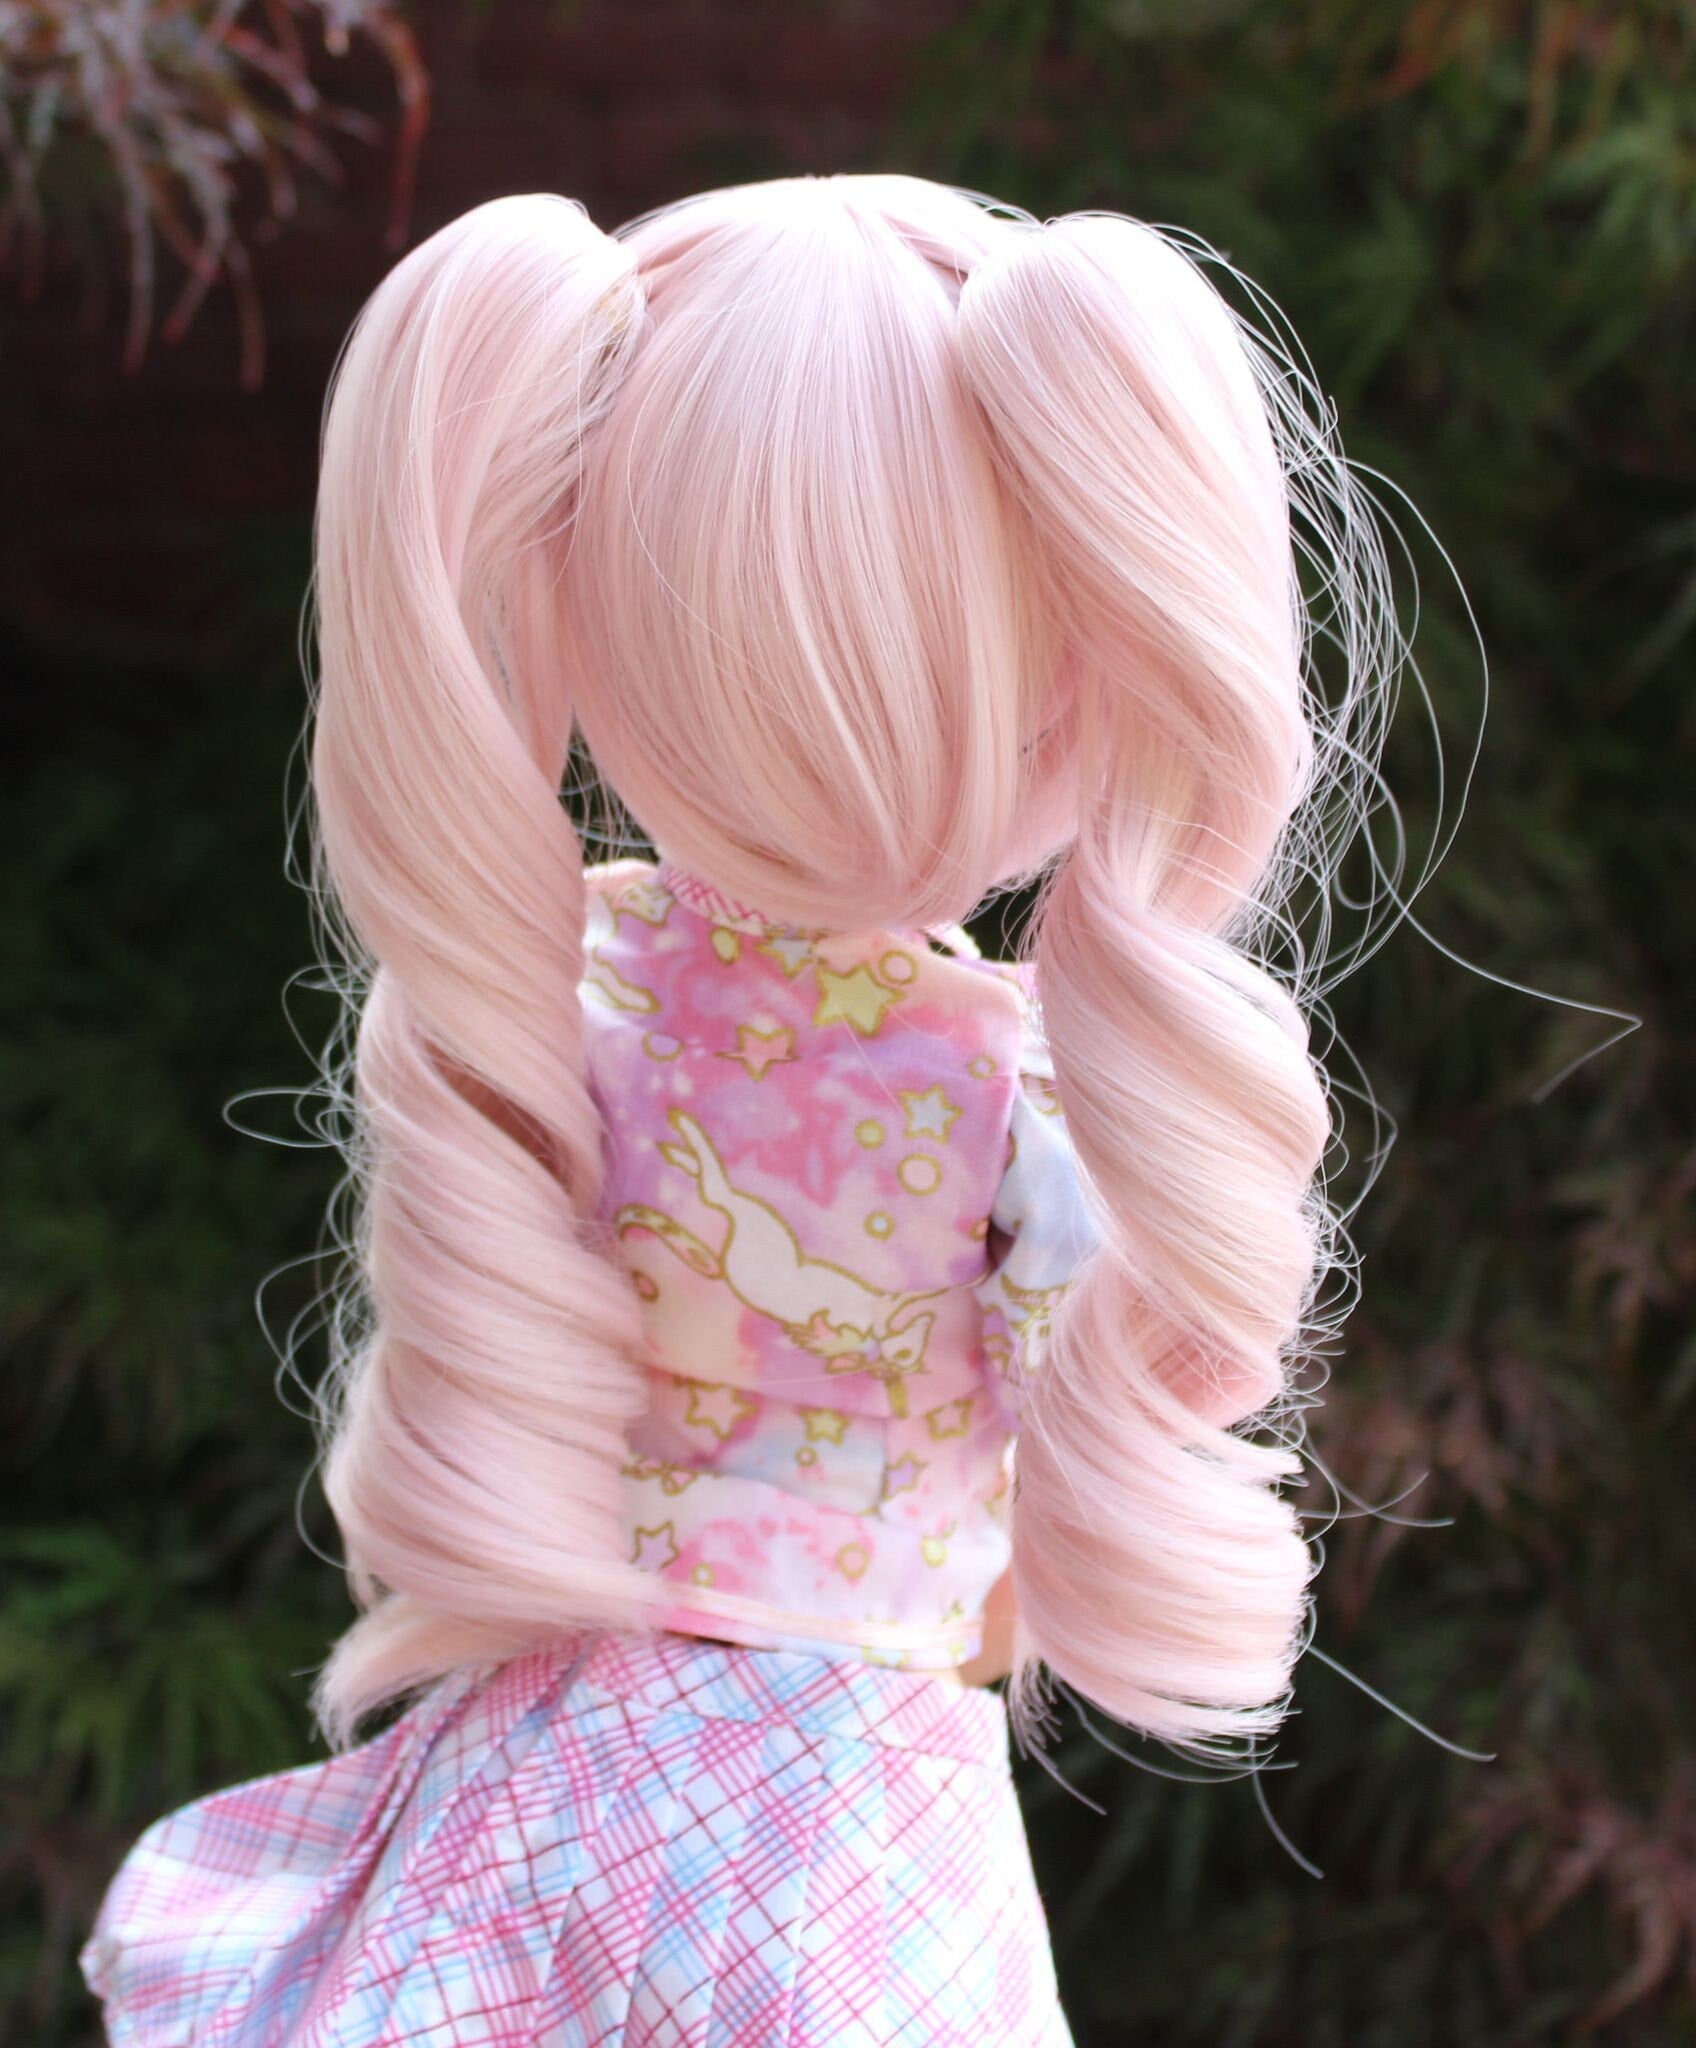 Custom doll WIG for Smart Dolls- Heat Safe - Tangle Resistant- 8.5" head size of Bjd, SD, Dollfie Dream dolls Pink ponytails removeable